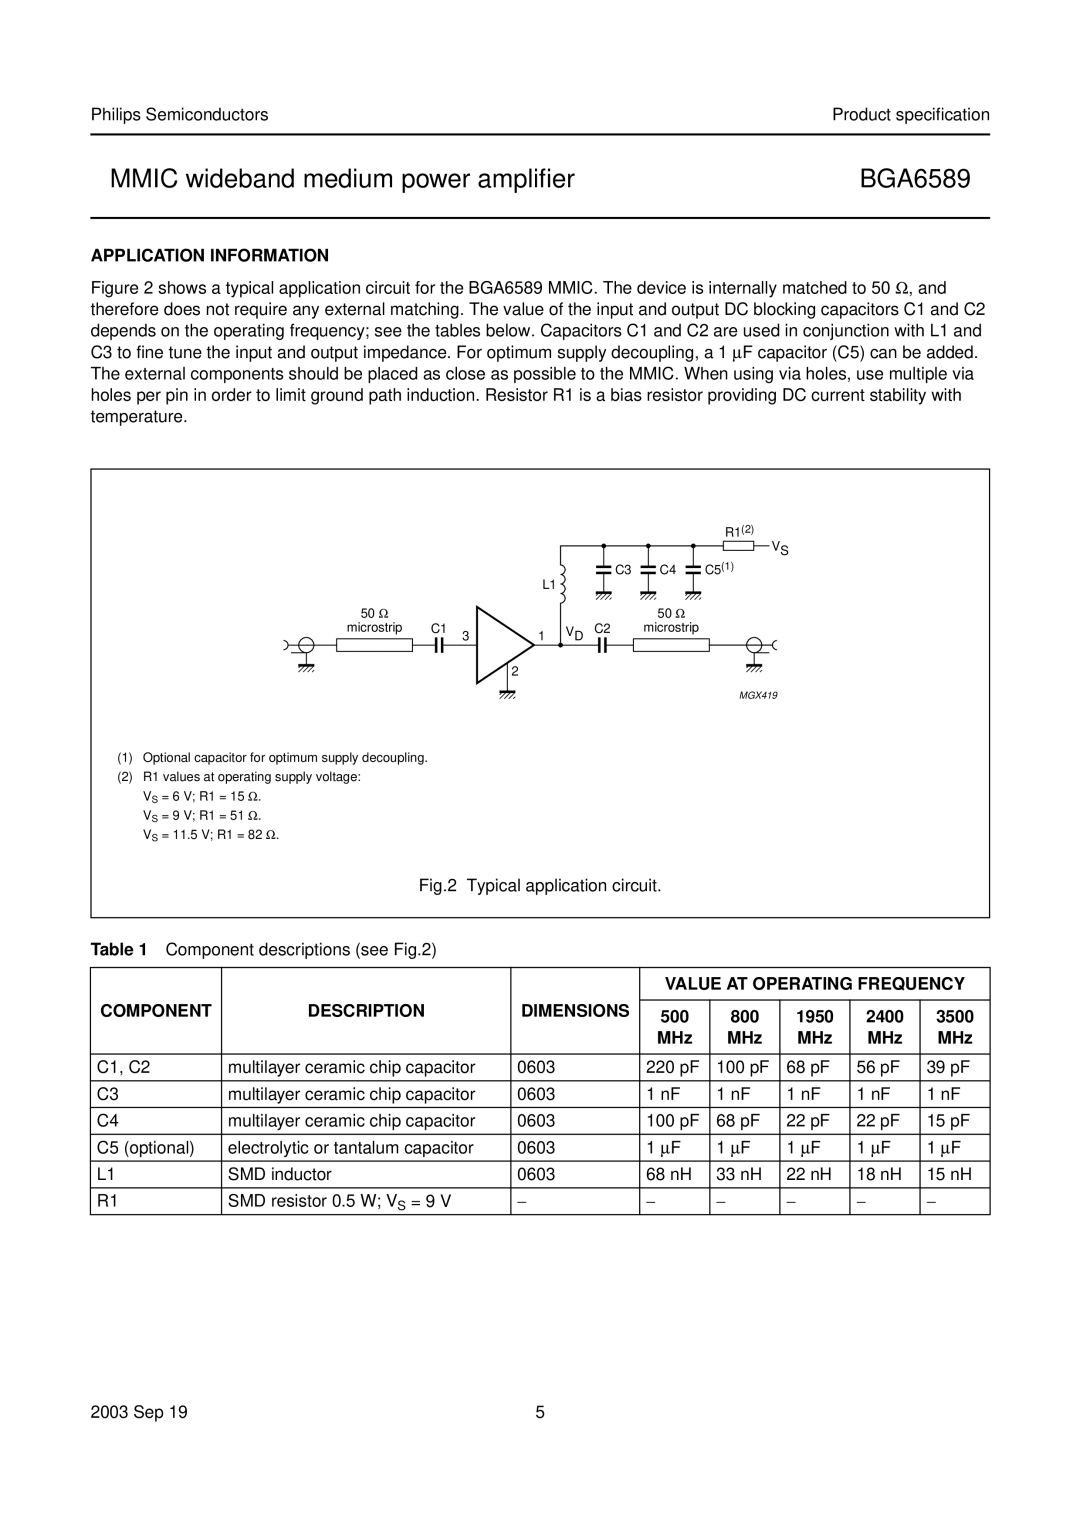 Philips BGA6589 manual MMIC wideband medium power ampliﬁer, Application Information 